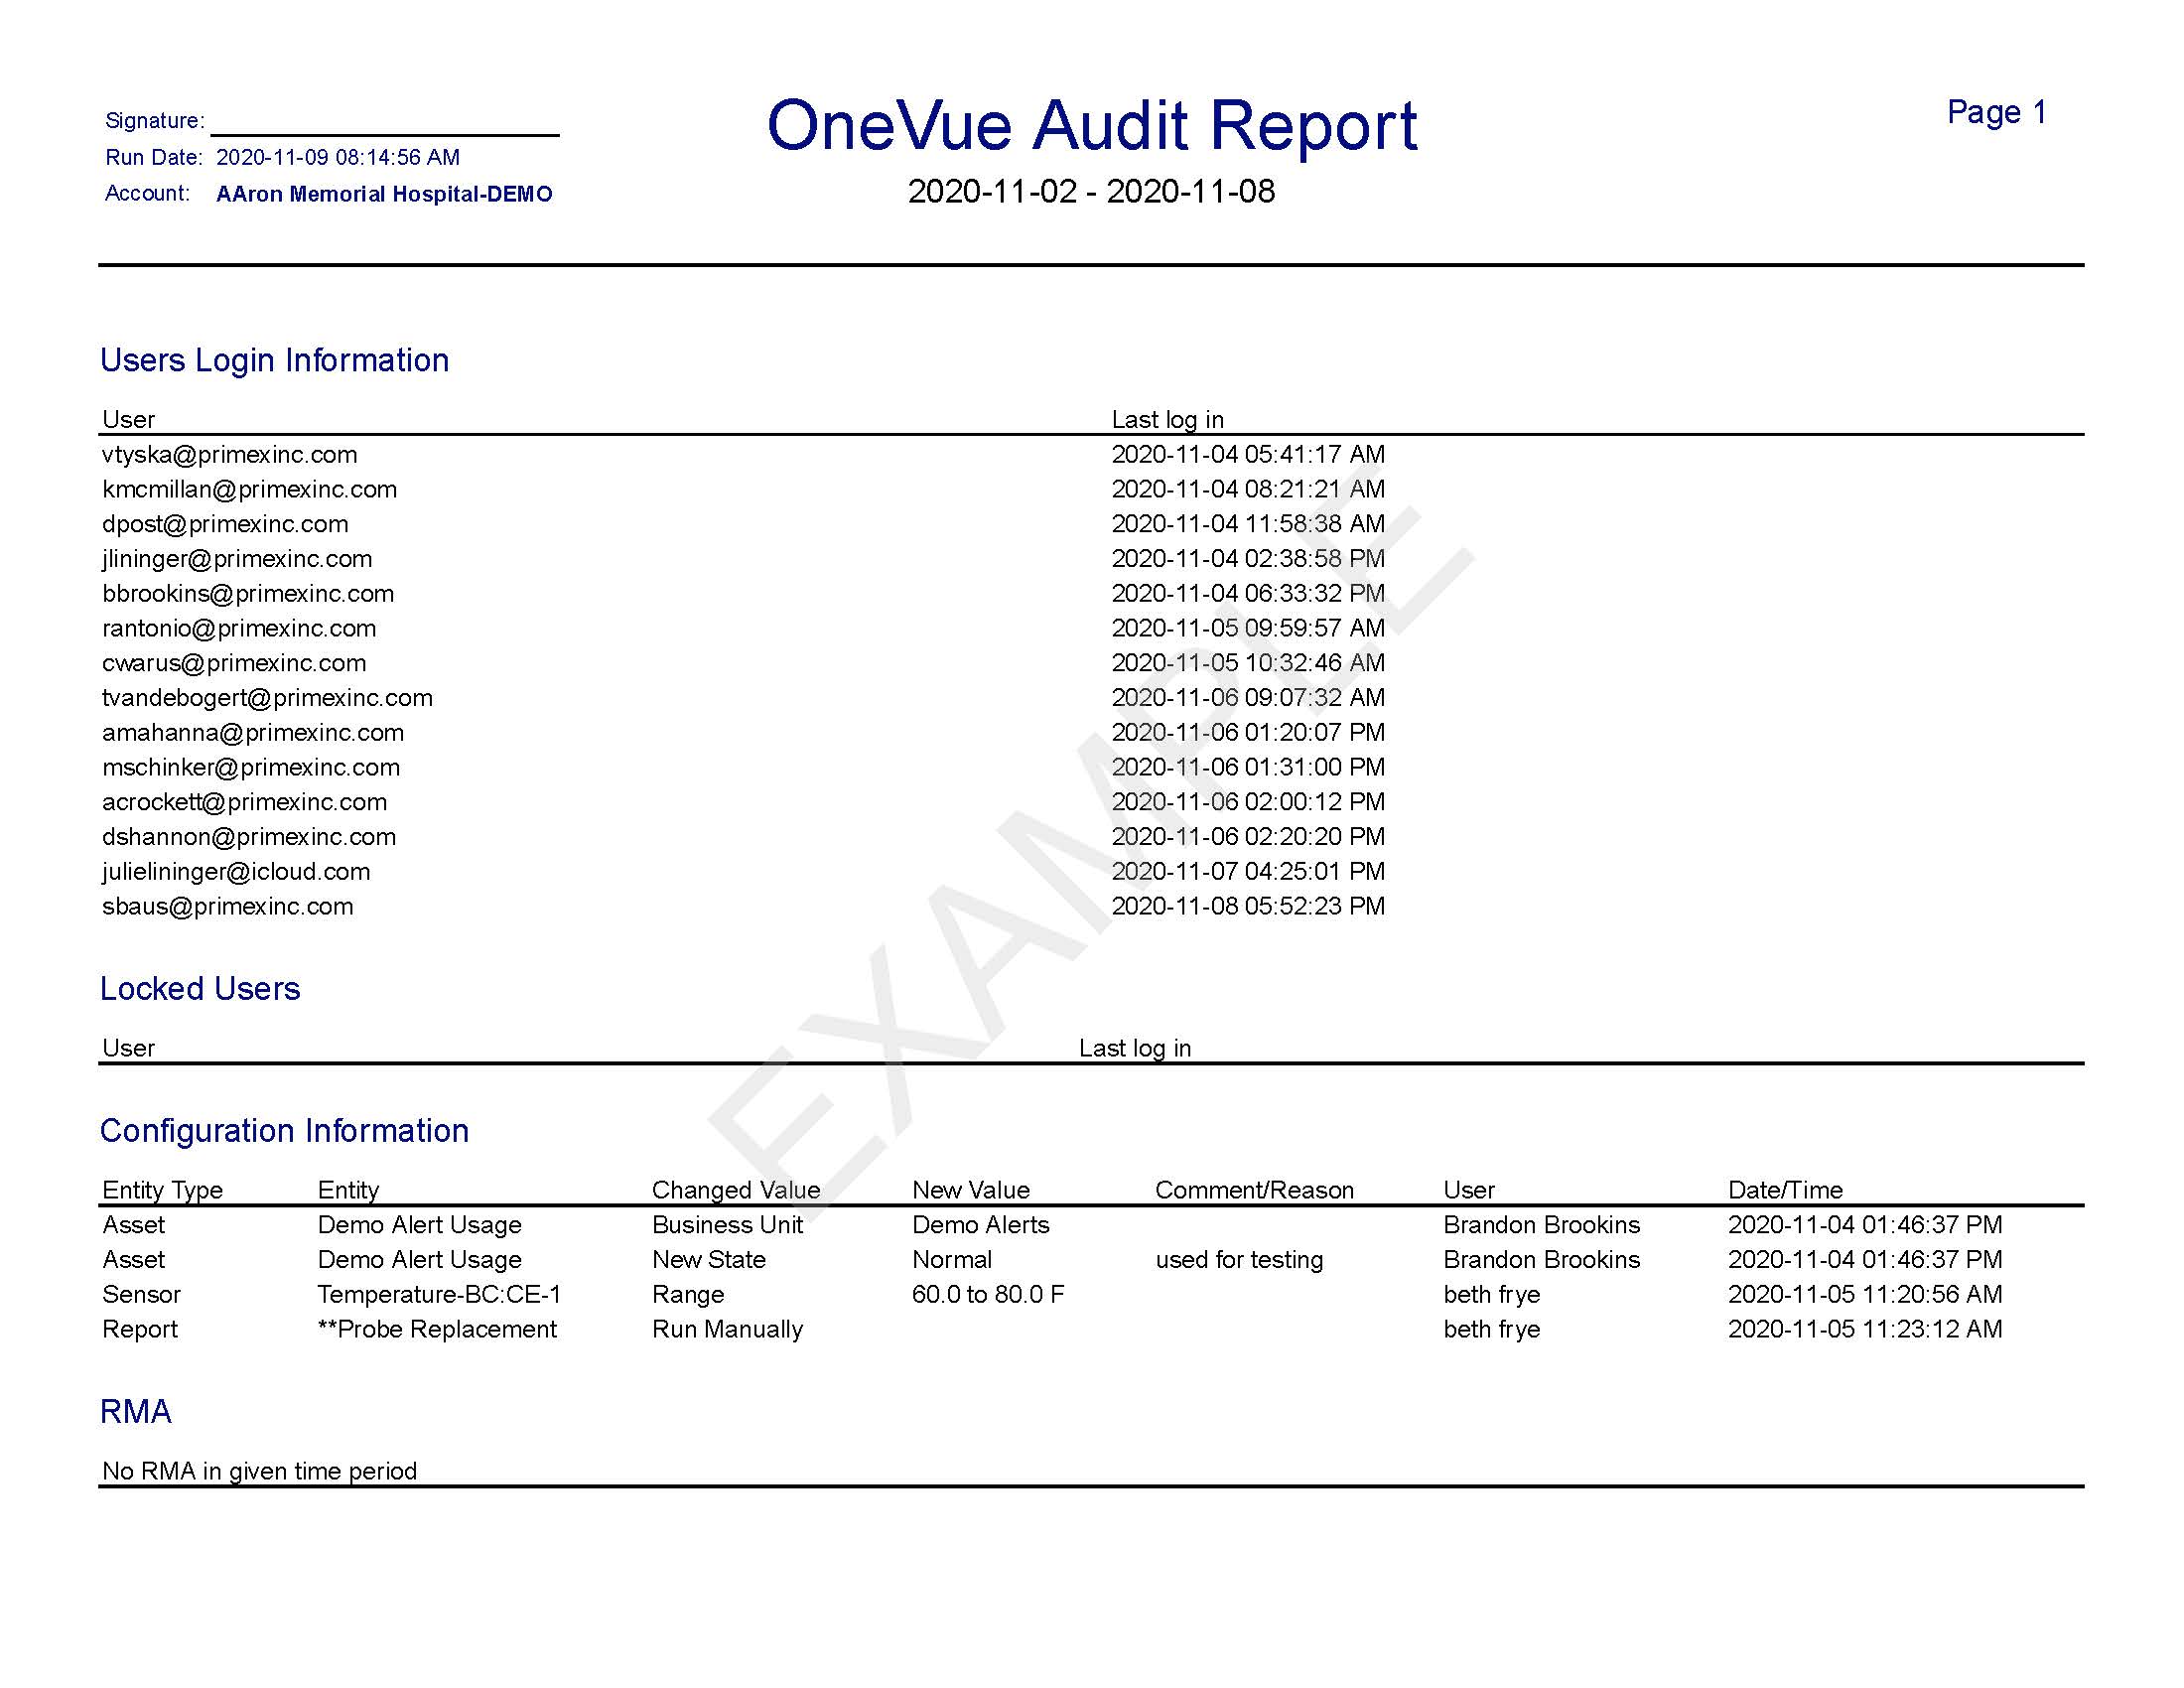 onevue-audit-report.pdf